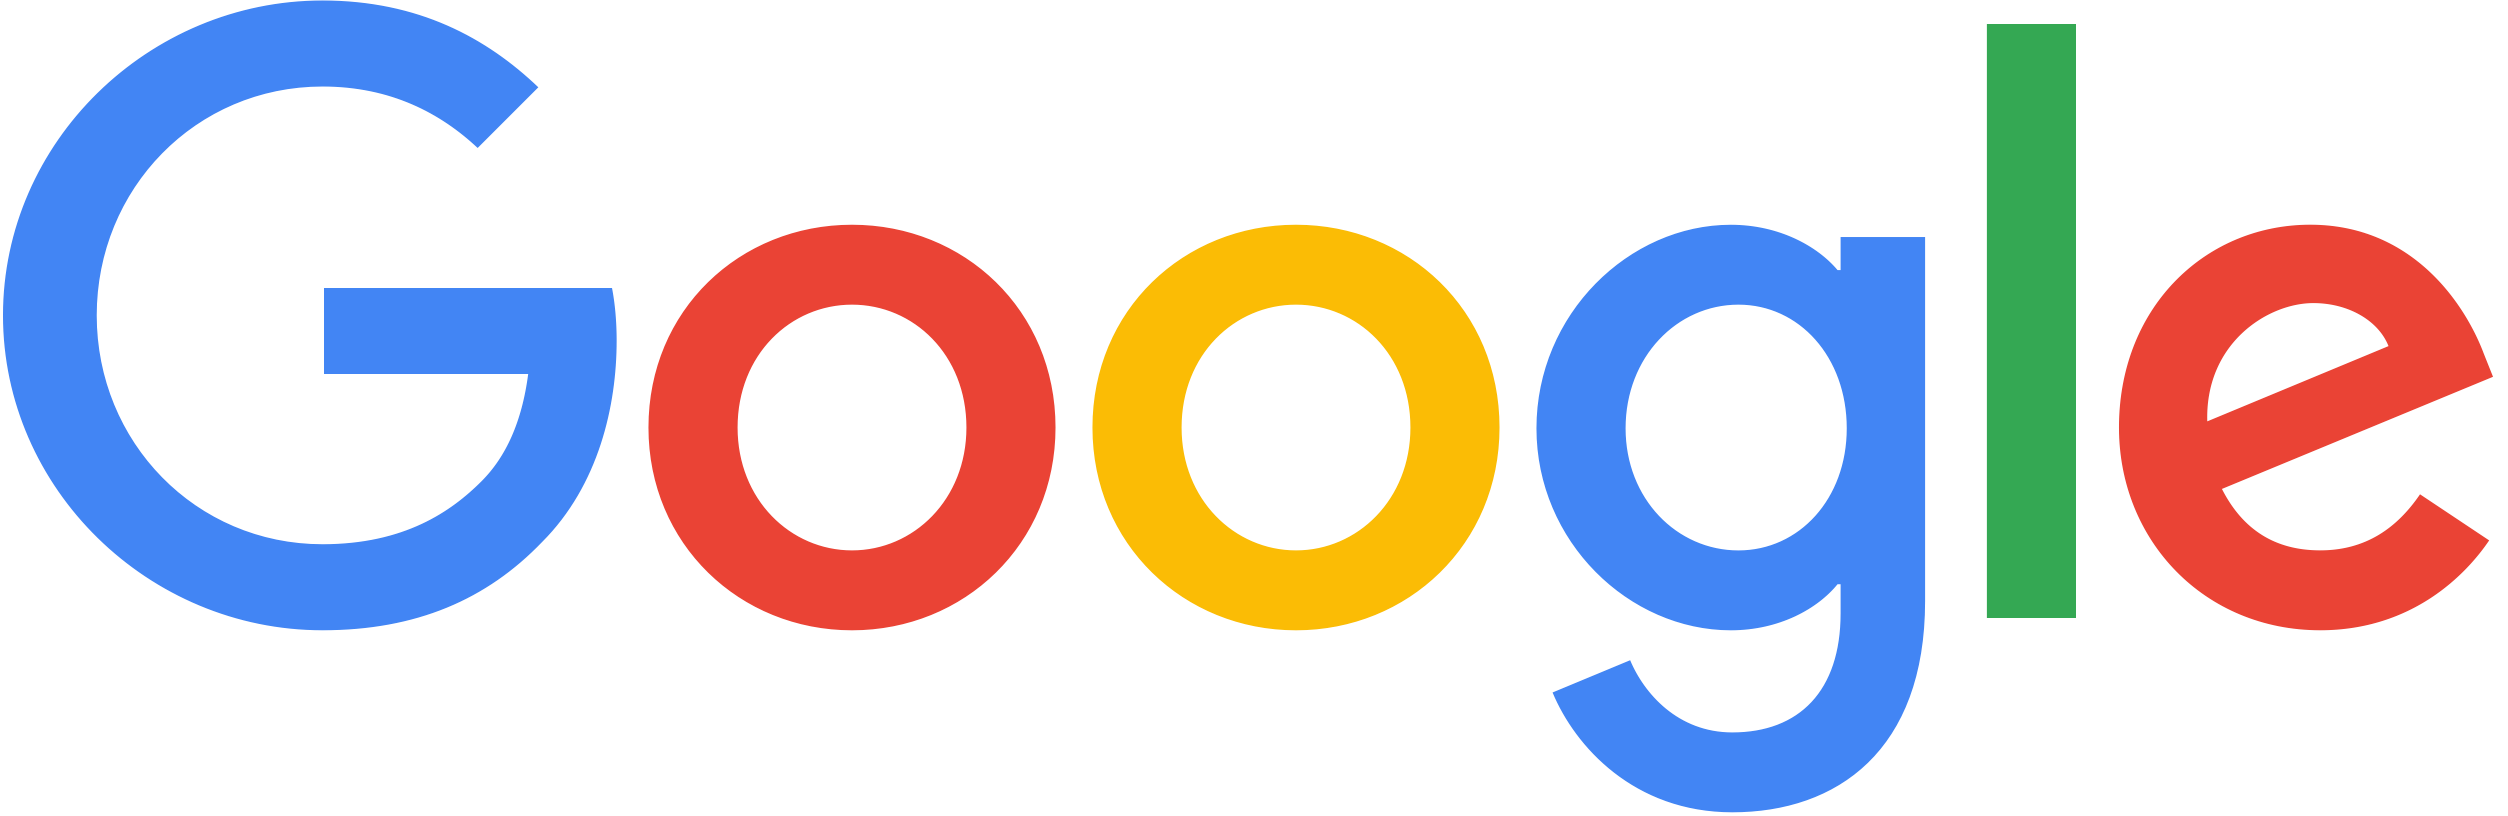 hq png google logo images free google